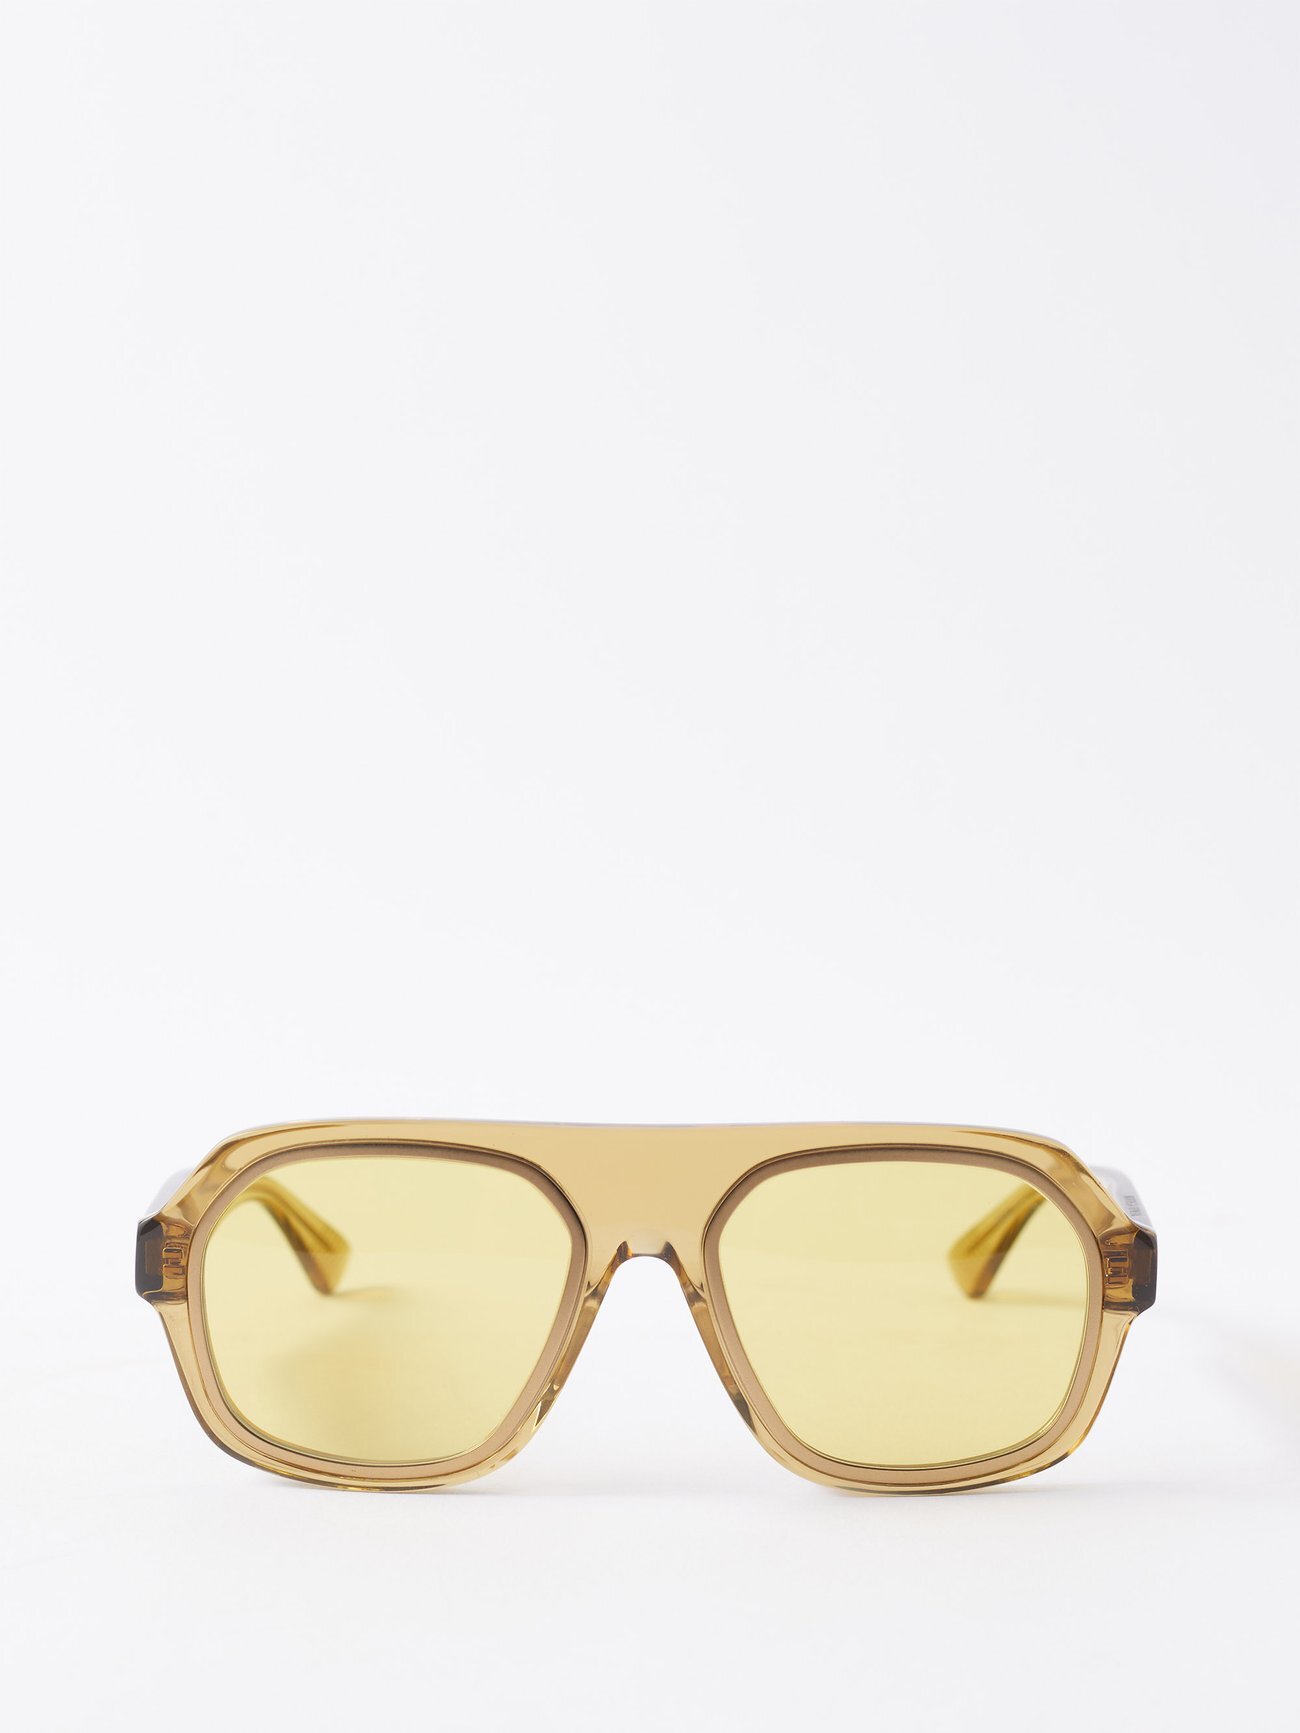 Bottega Veneta Eyewear - Aviator Acetate And Metal Sunglasses - Womens - Dark Yellow